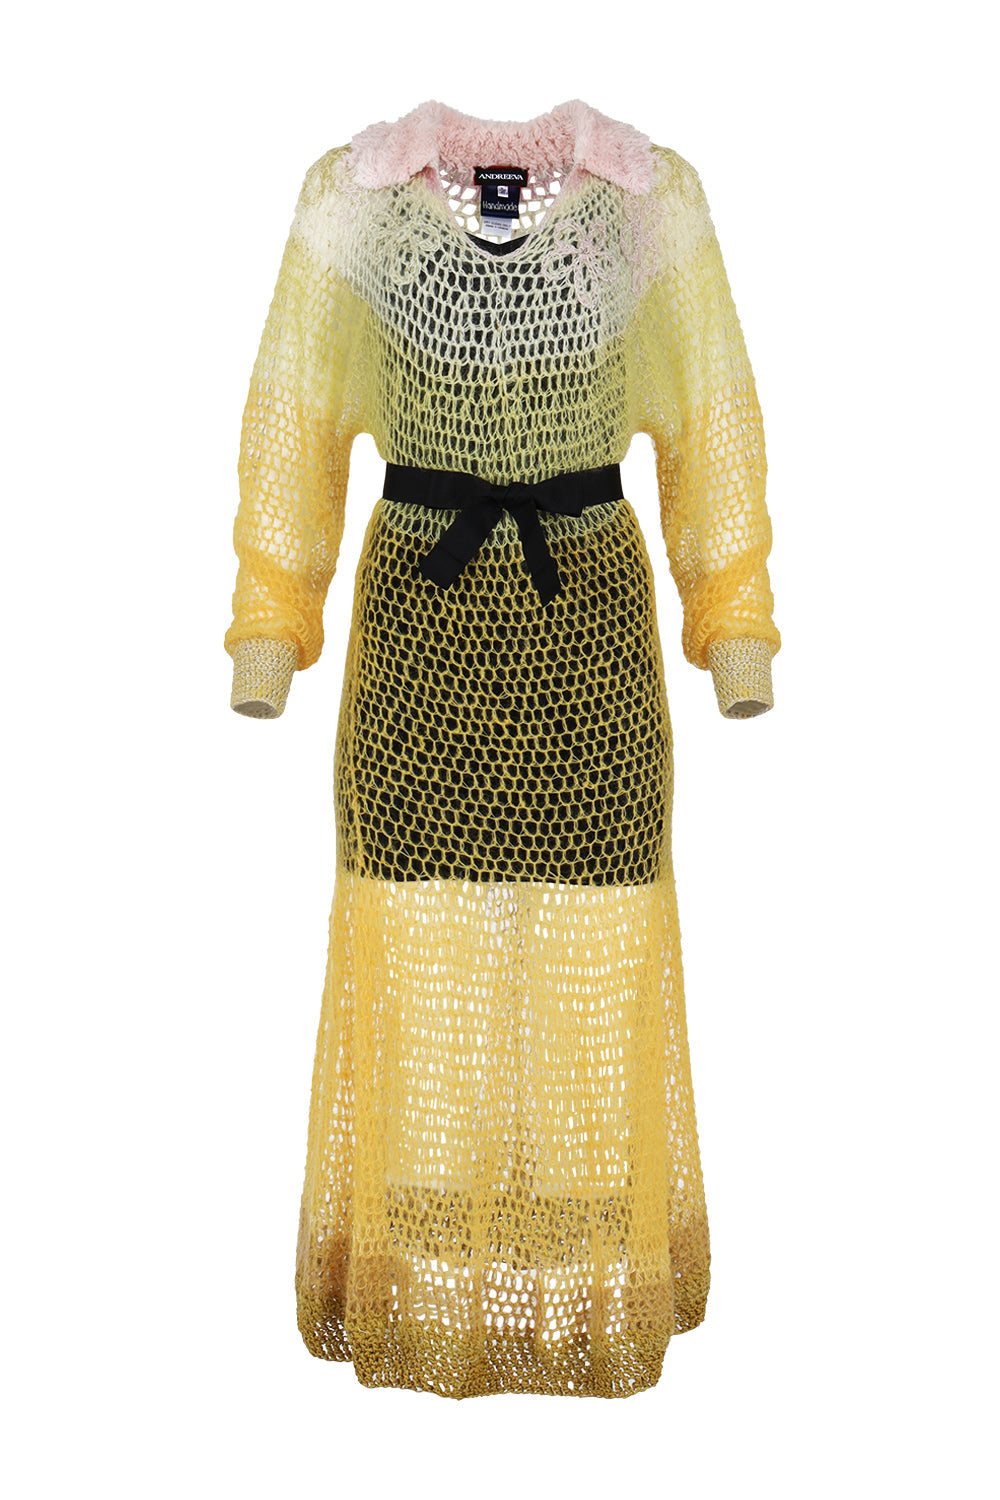 Yellow Rose Handmade Knit Dress